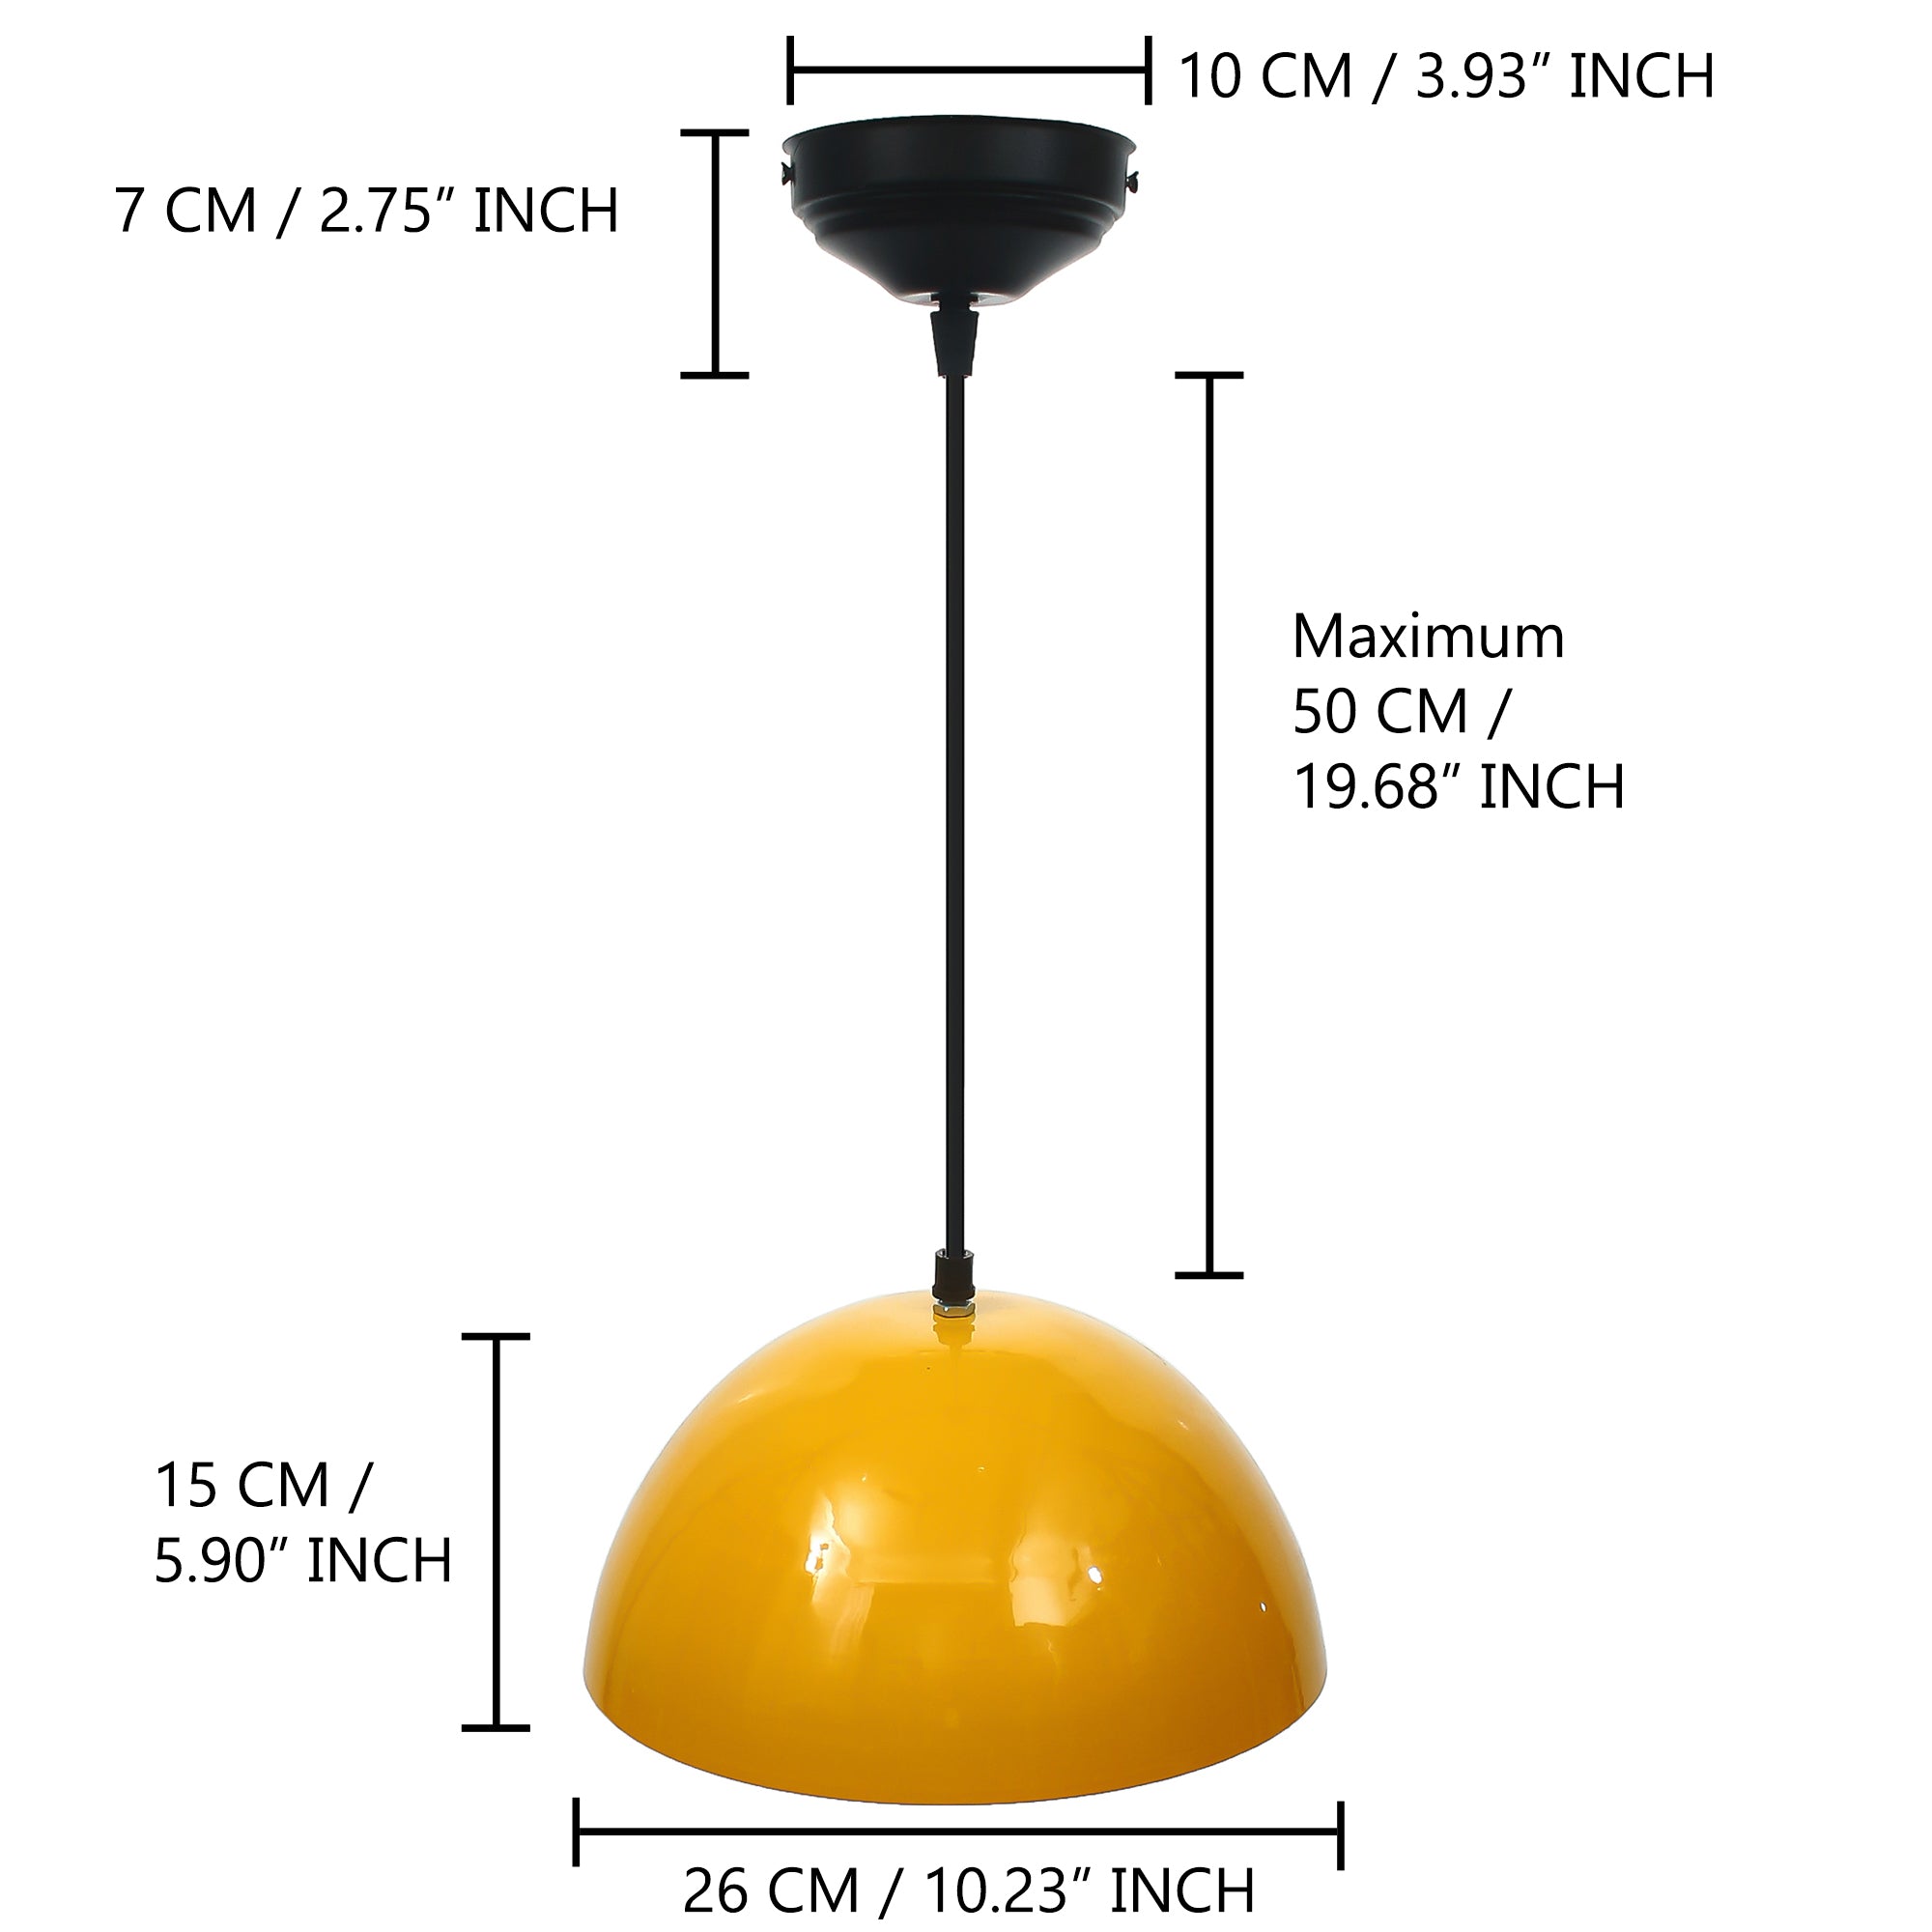 Shining Yellow Glossy Finish Pendant Light, 10" Diameter Ceiling Hanging Lamp for Home/Living Room/Offices/Restaurants 3